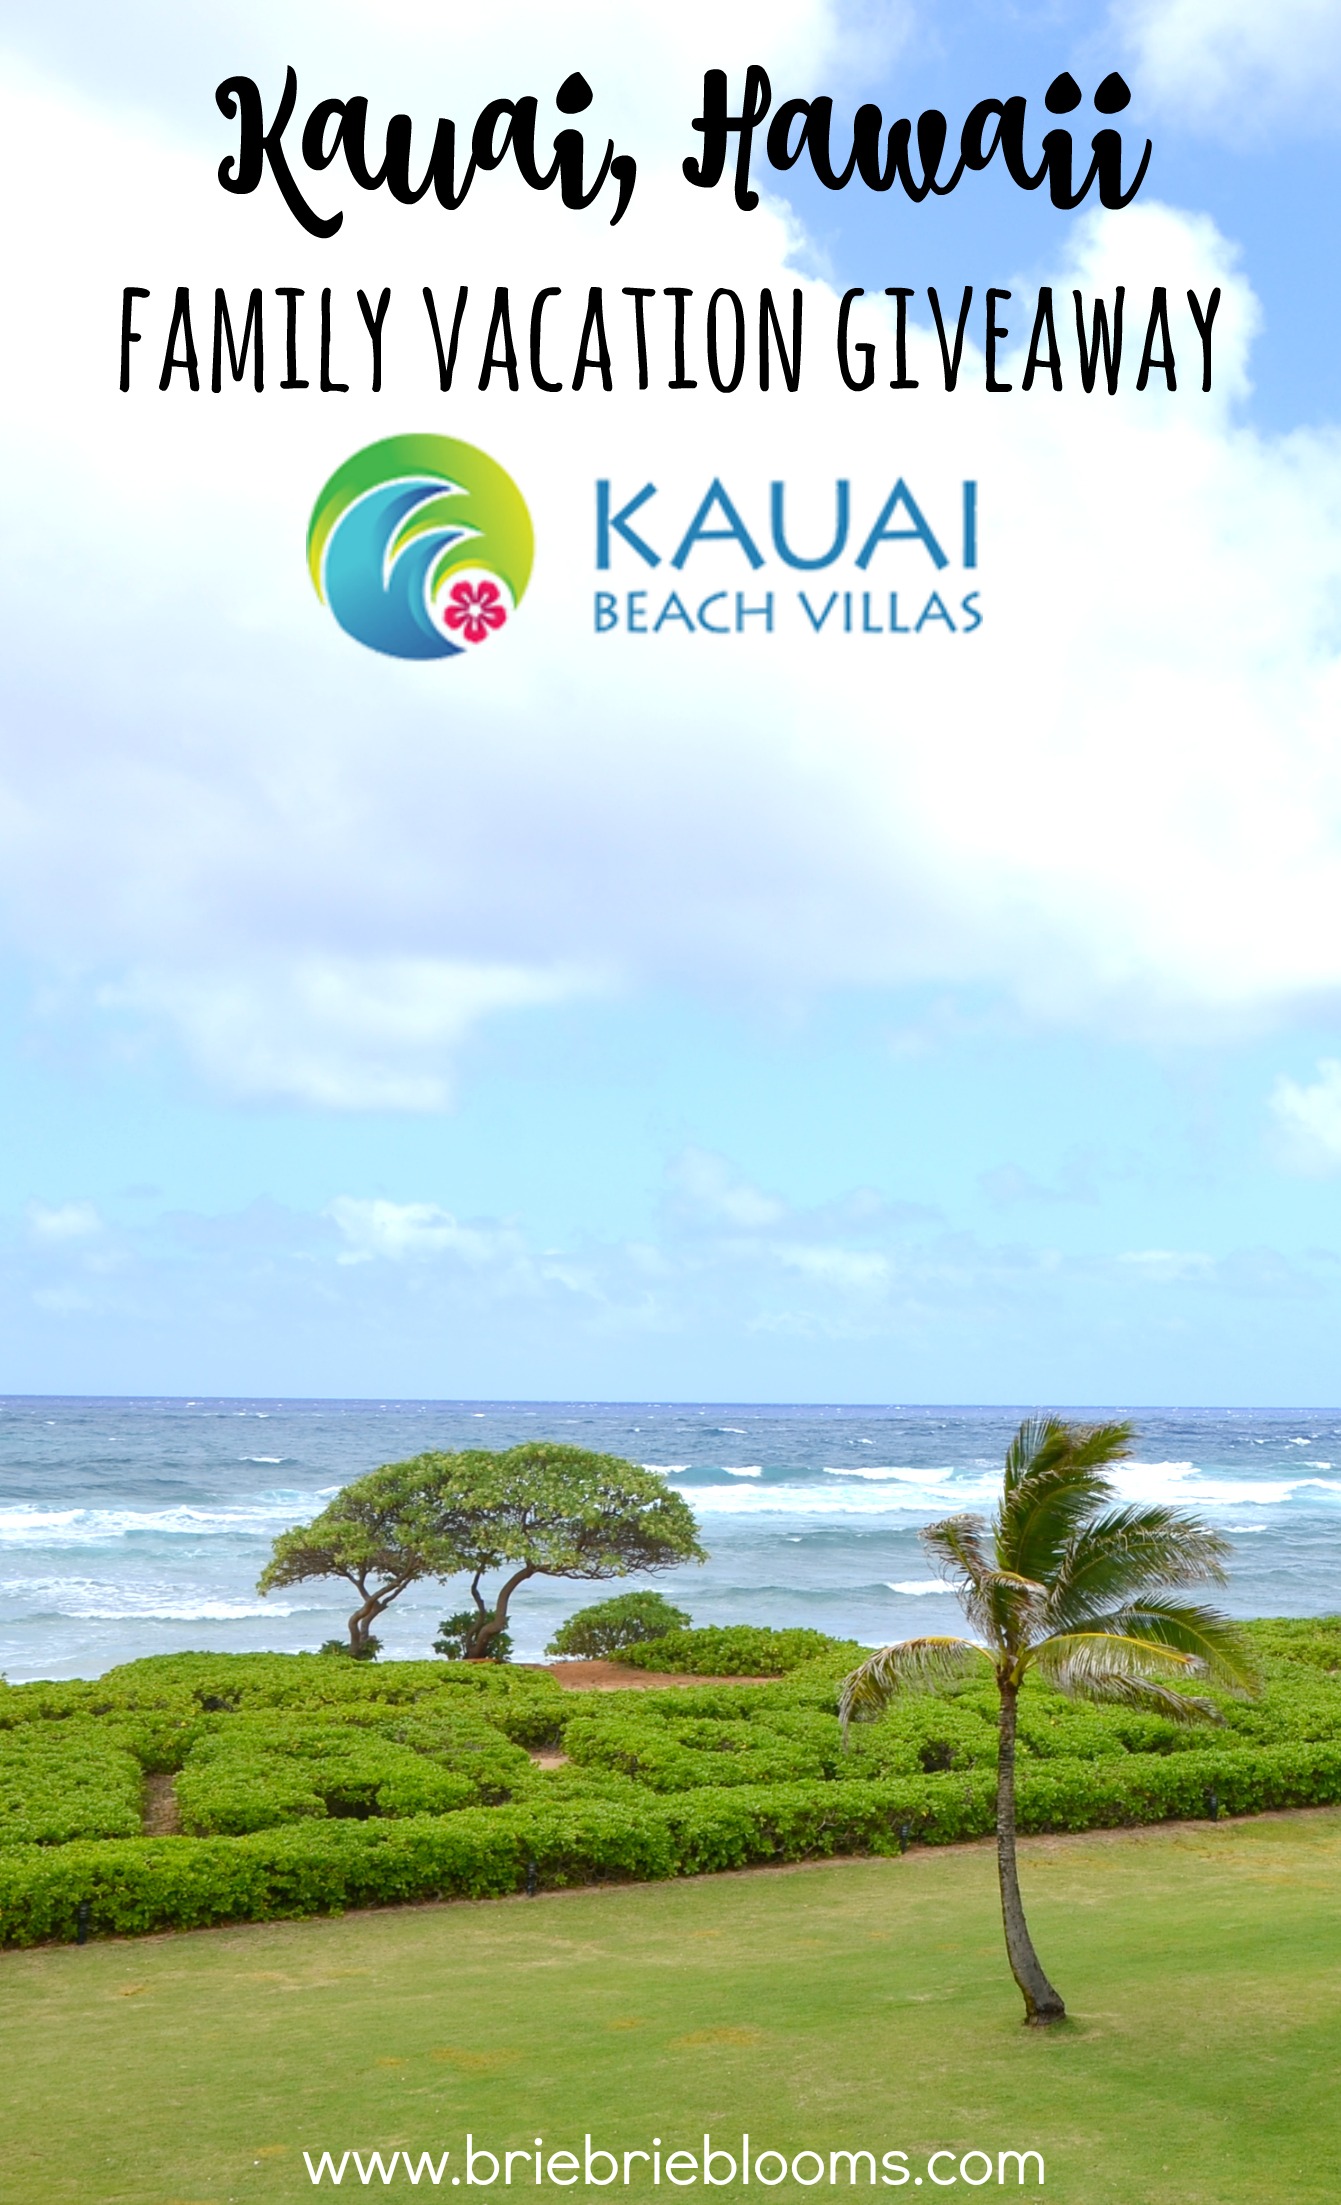 Kauai Beach Villas vacation giveaway